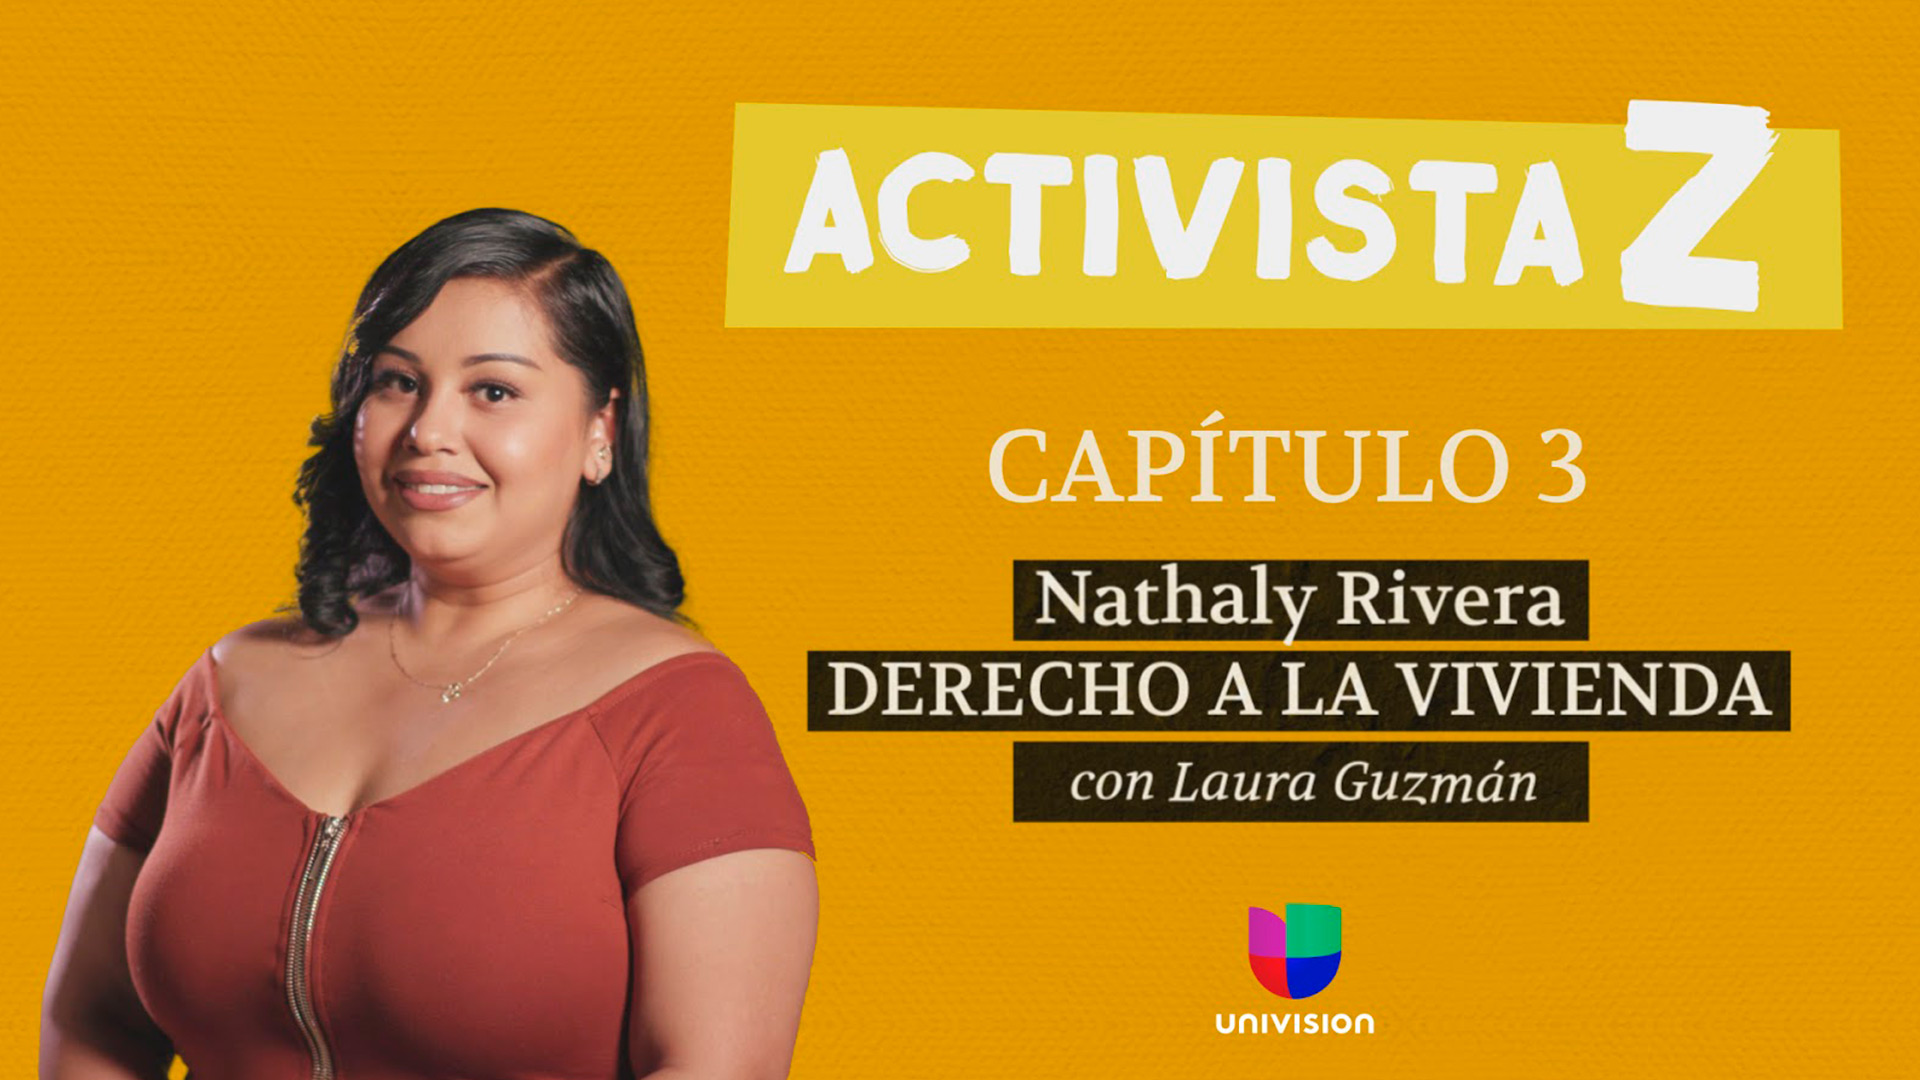 Univision ActivistaZ